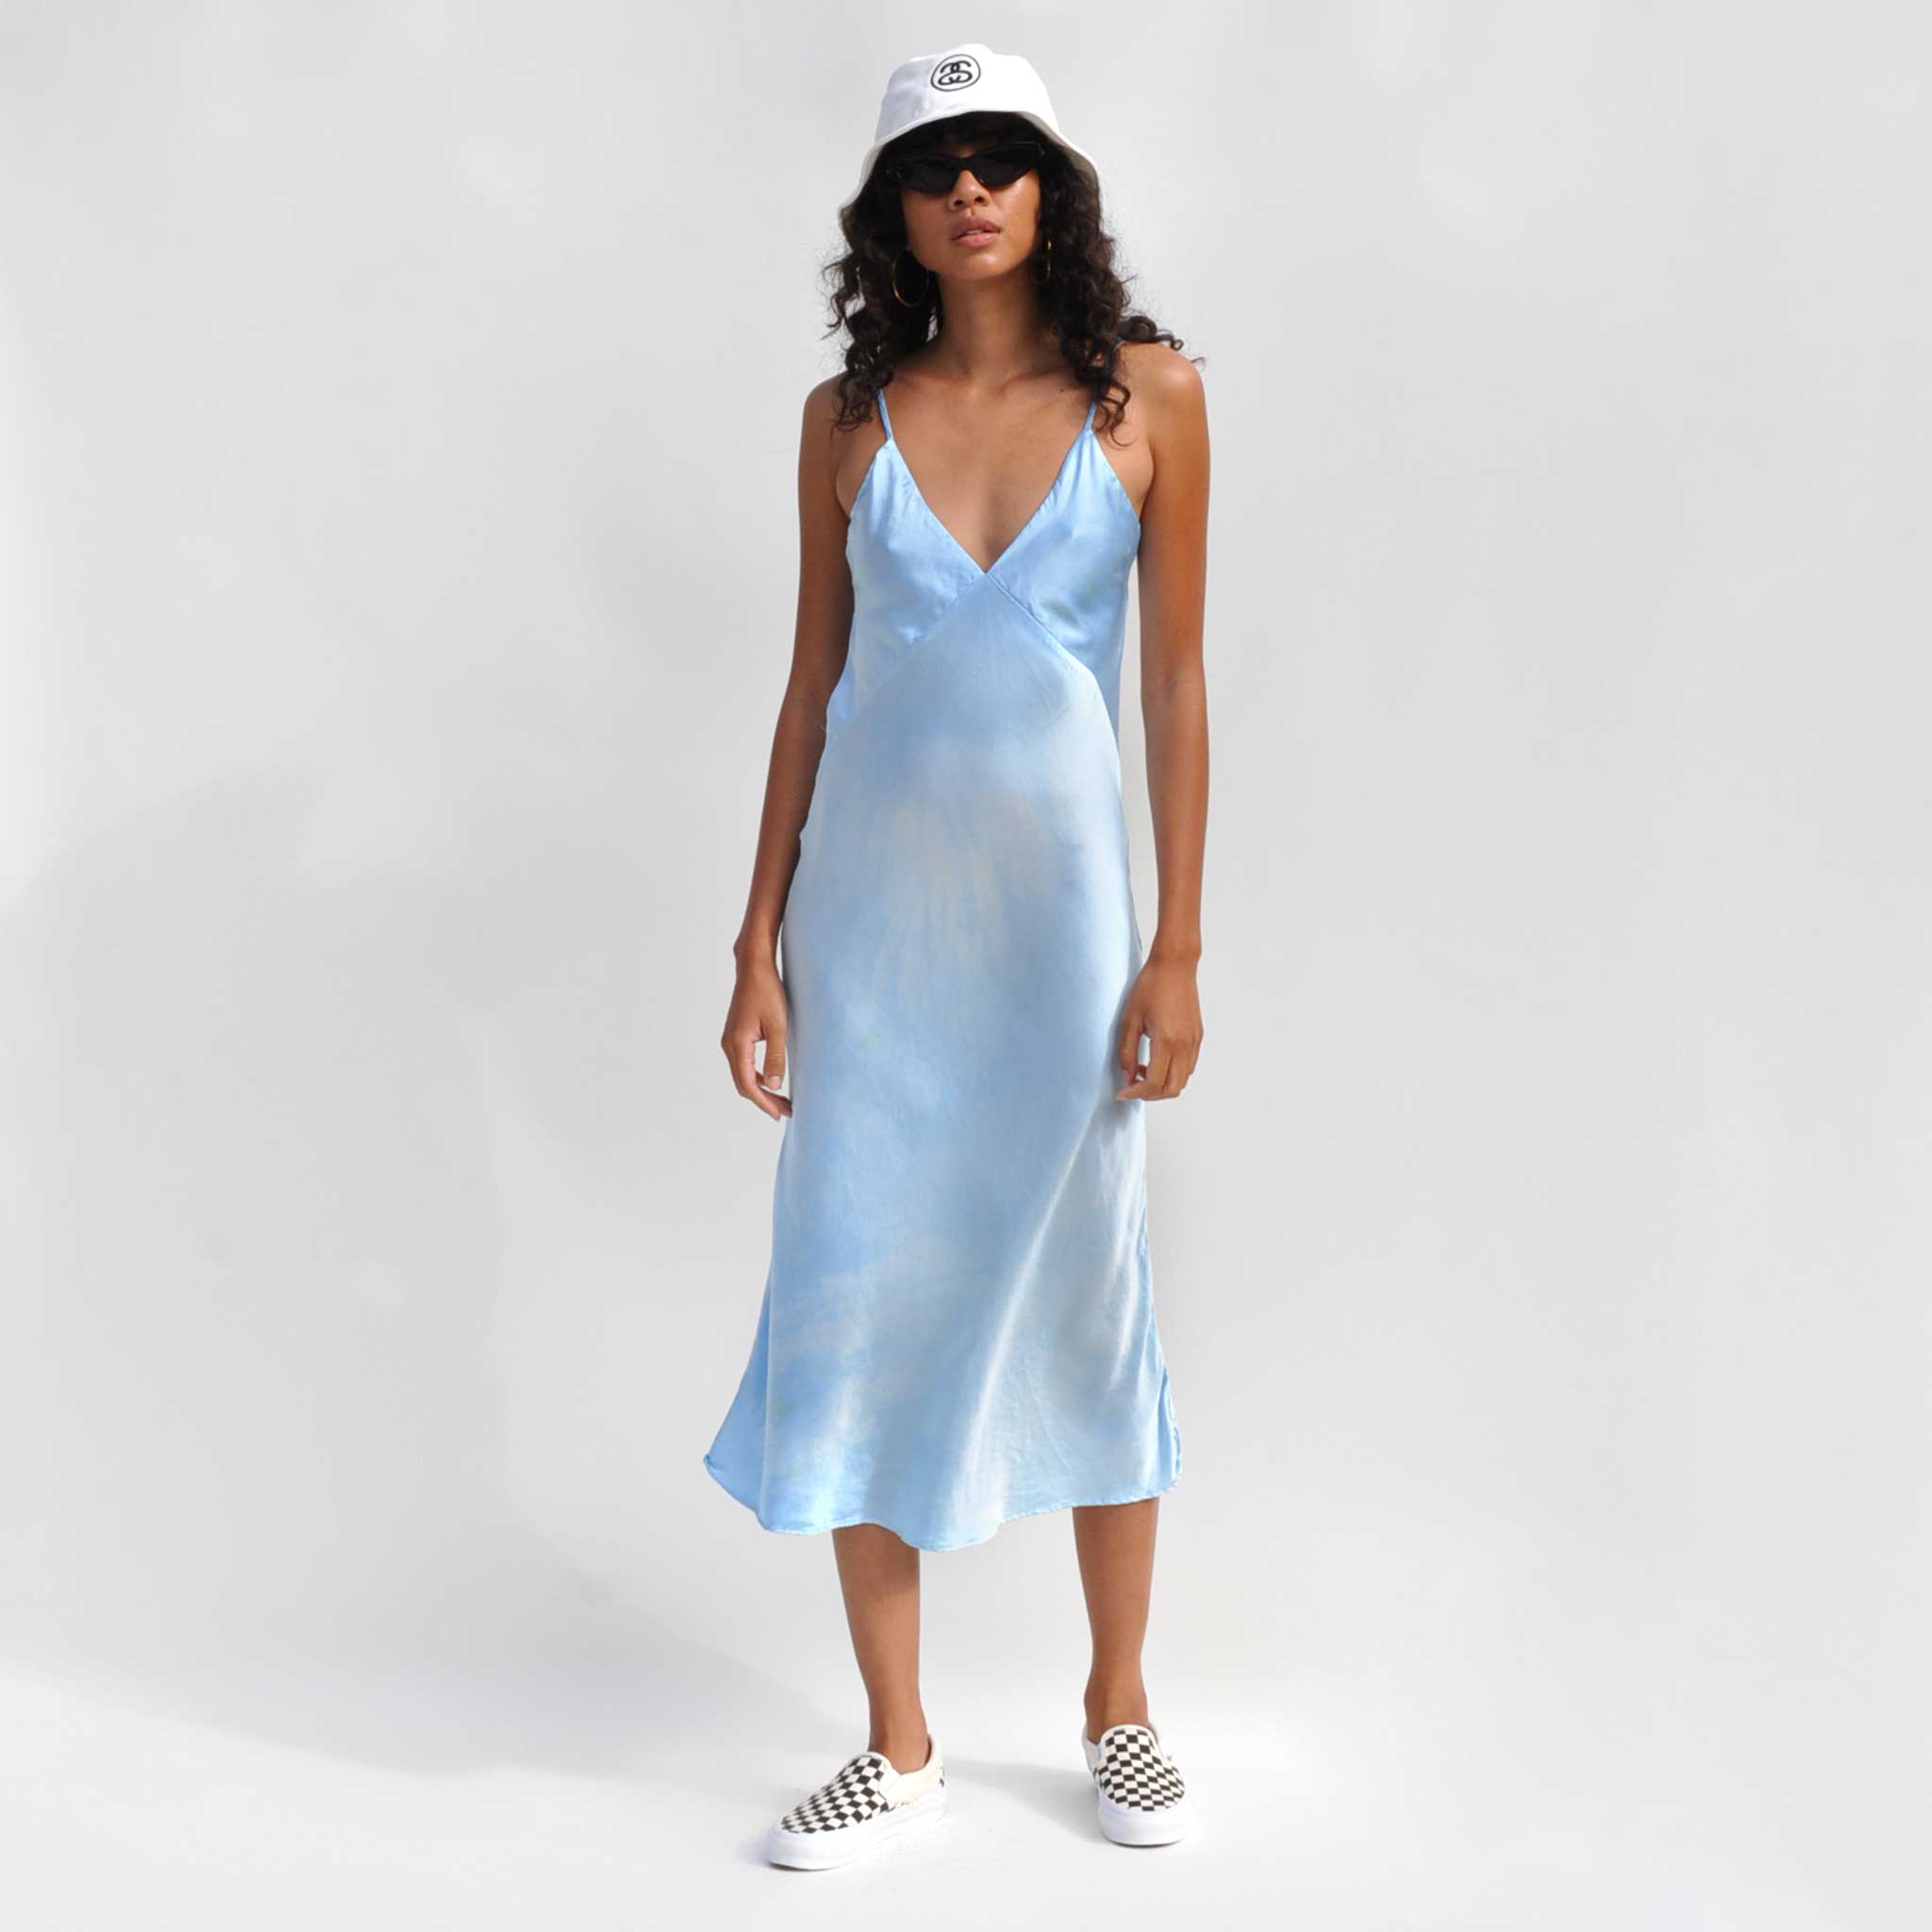 Full body photo of model wearing the Vee Midi Slip Dress - Sky